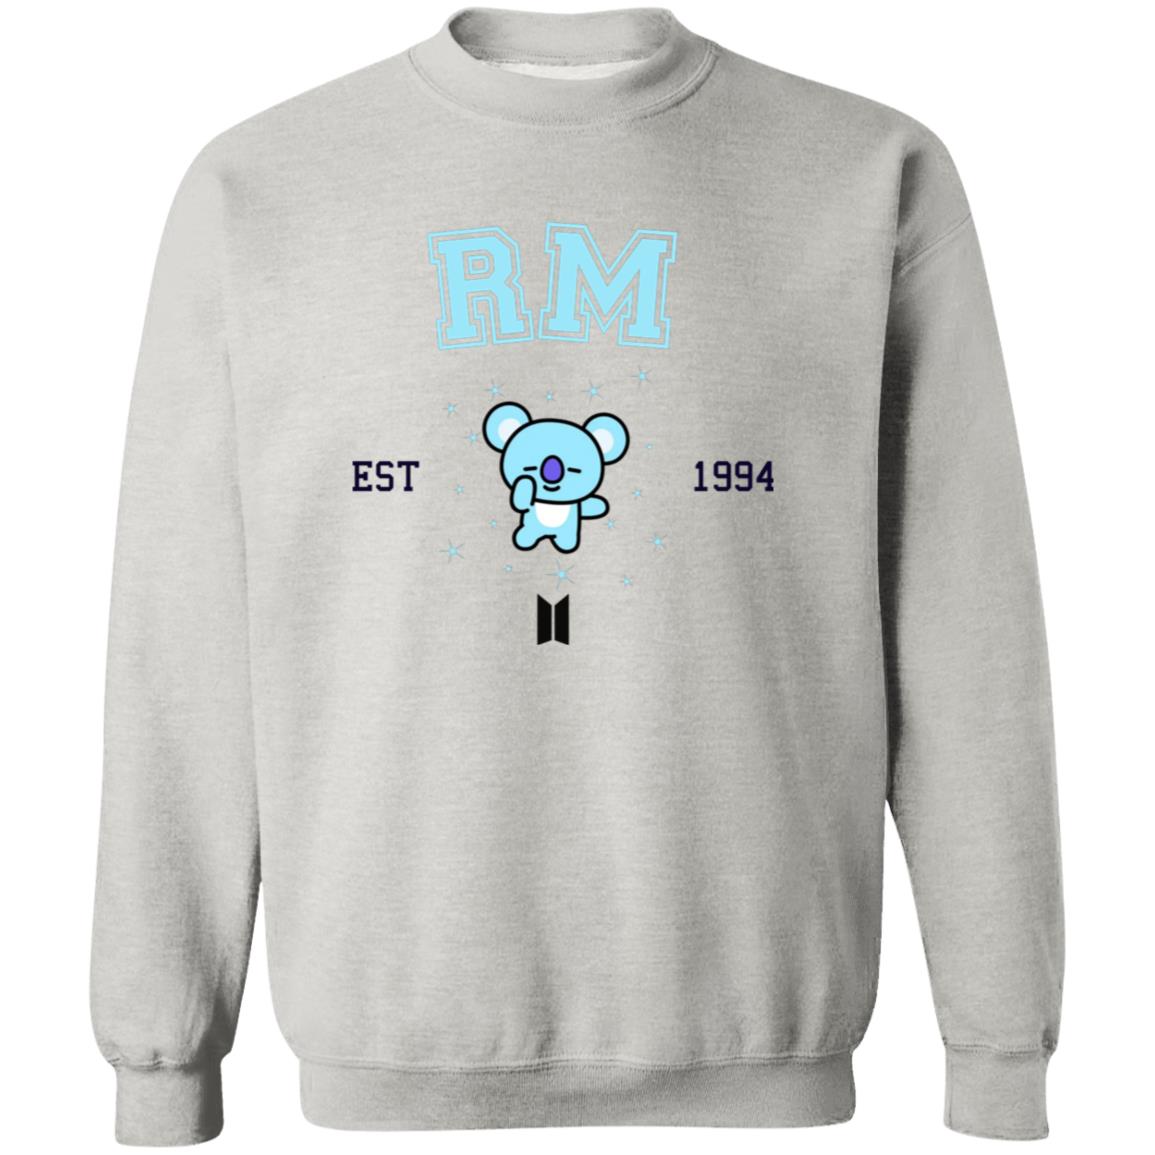 BT21 Koya Sweatshirt BTS RM Sweater